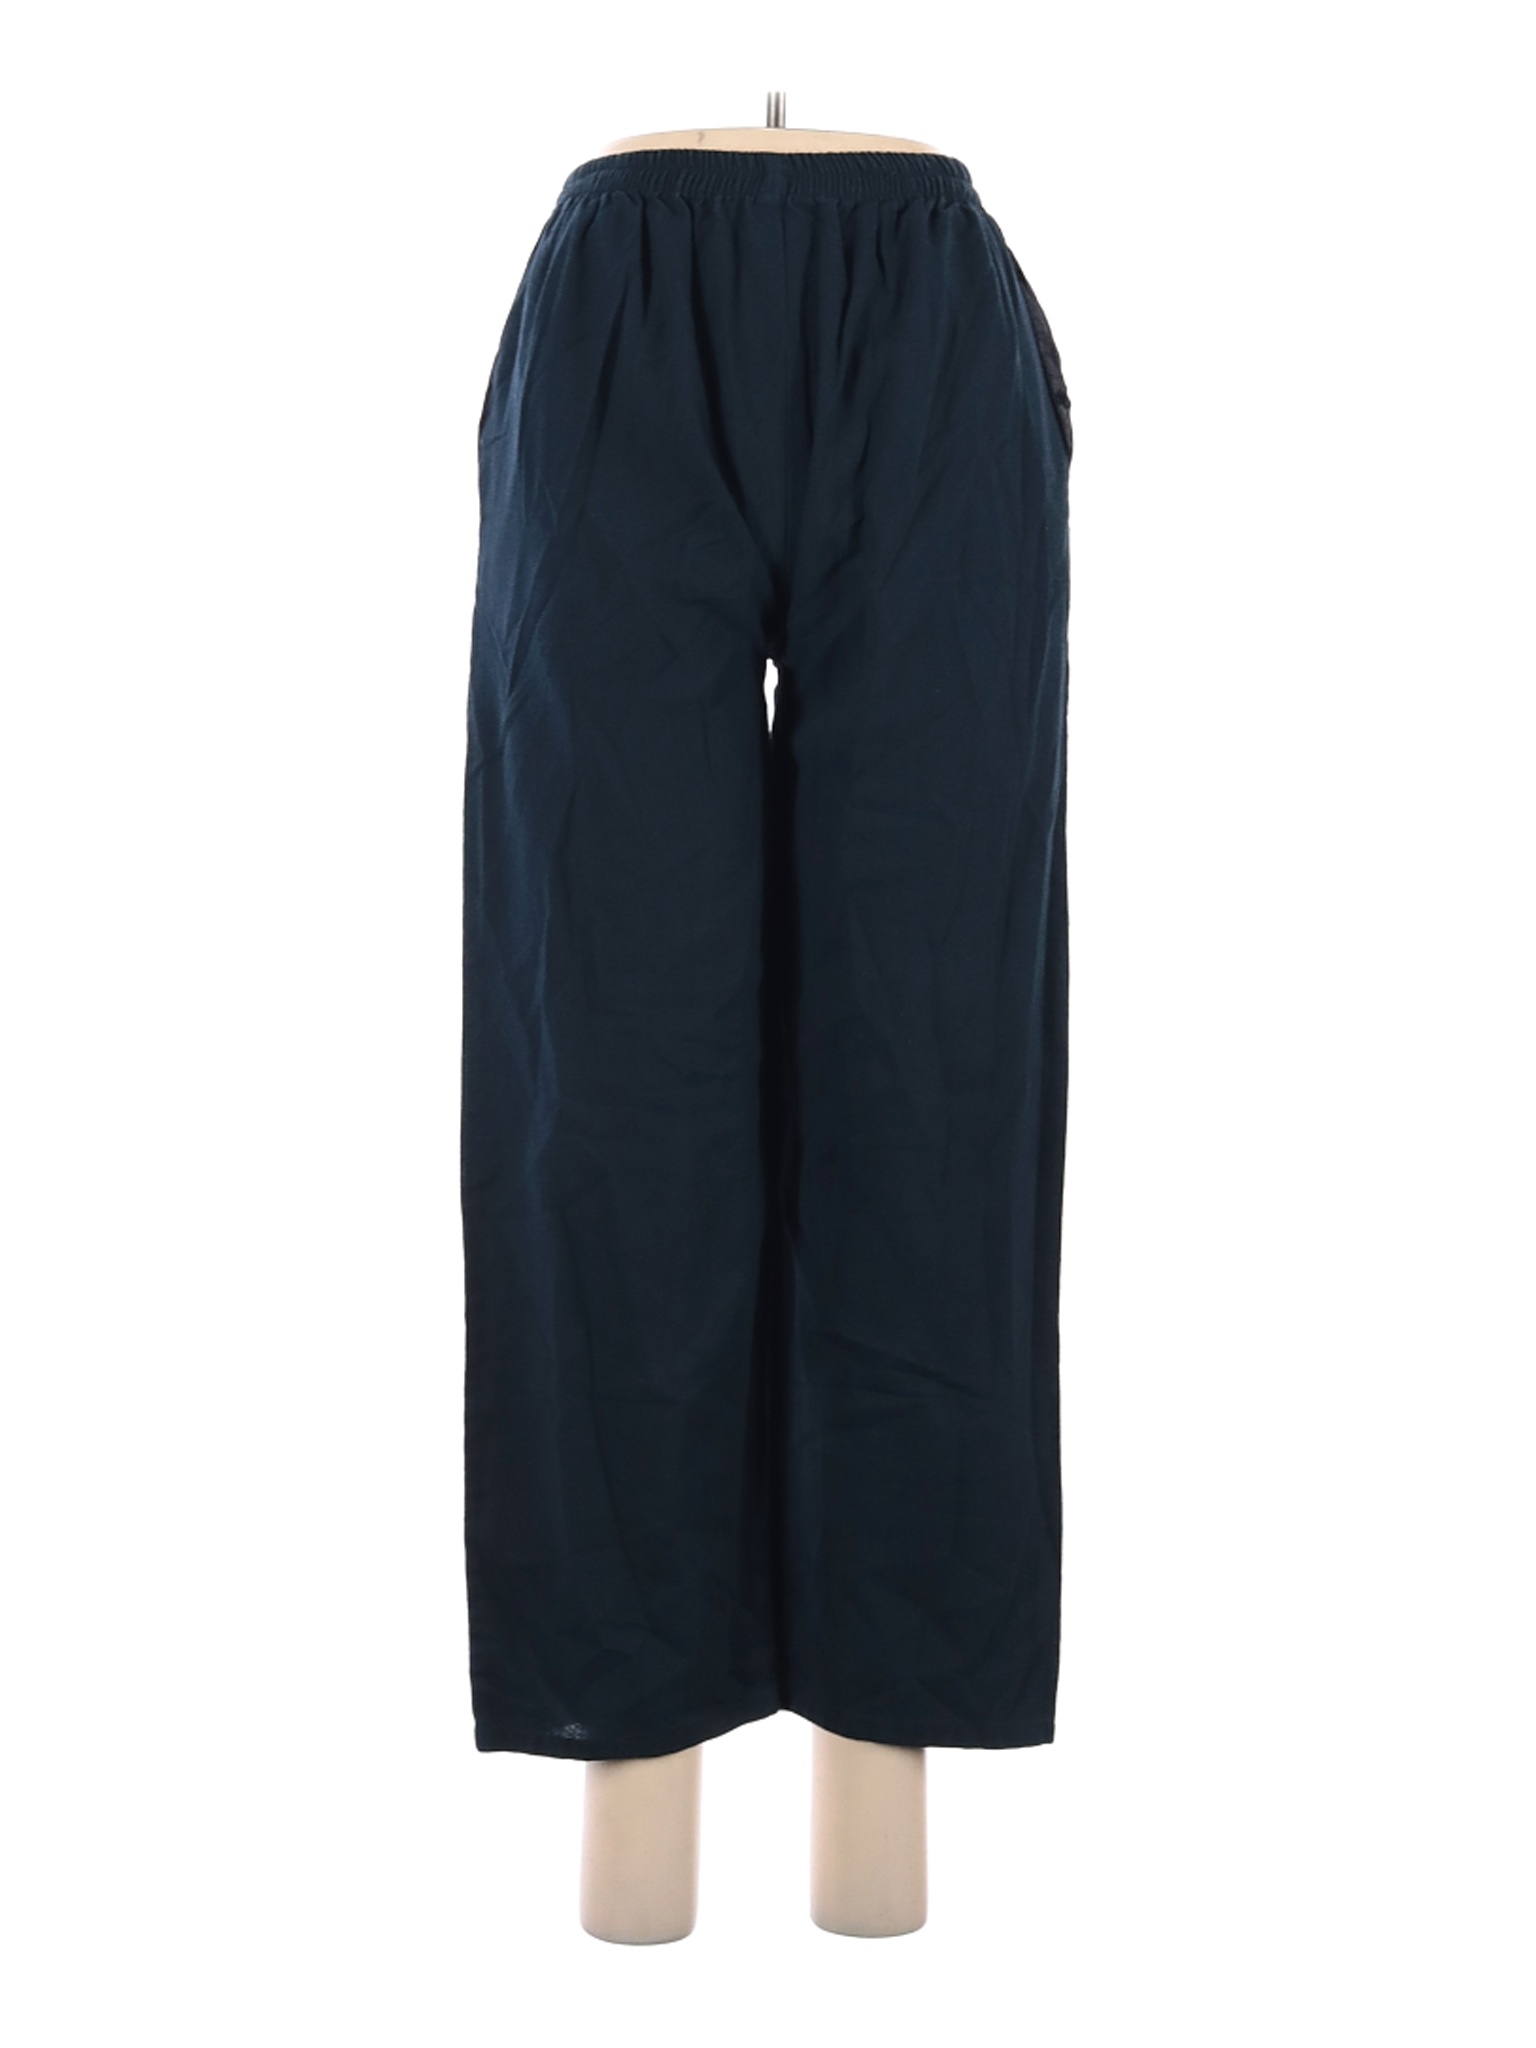 Unbranded Women Blue Casual Pants M | eBay